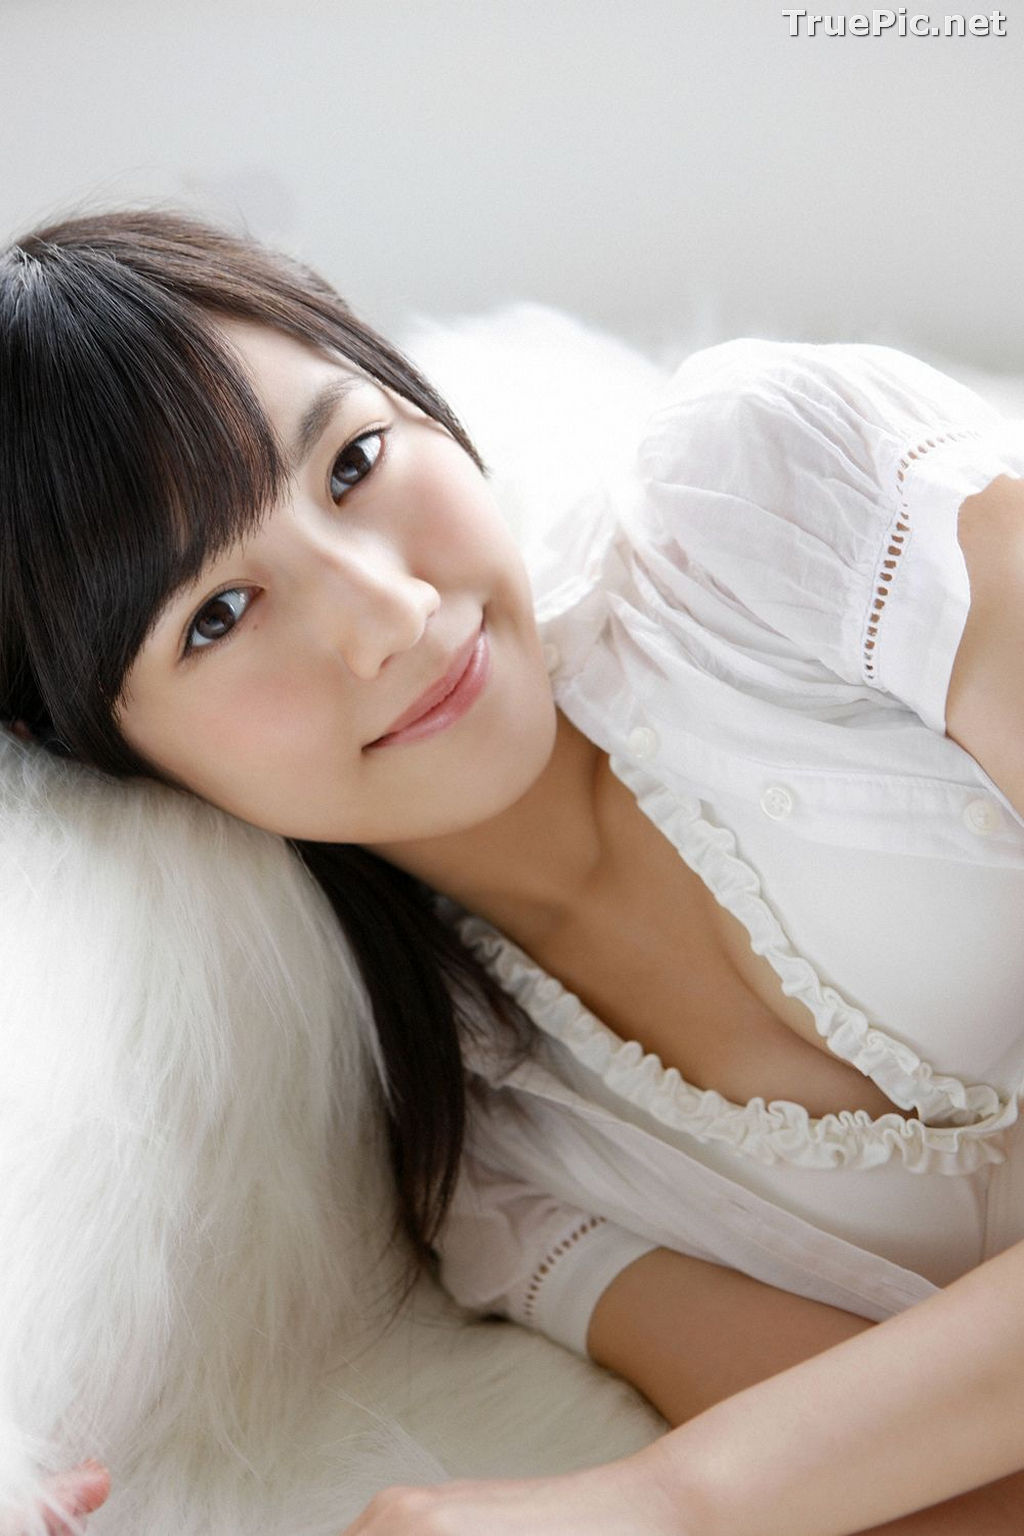 Image [YS Web] Vol.531 - Japanese Idol Girl Group (AKB48) - Mayu Watanabe - TruePic.net - Picture-29